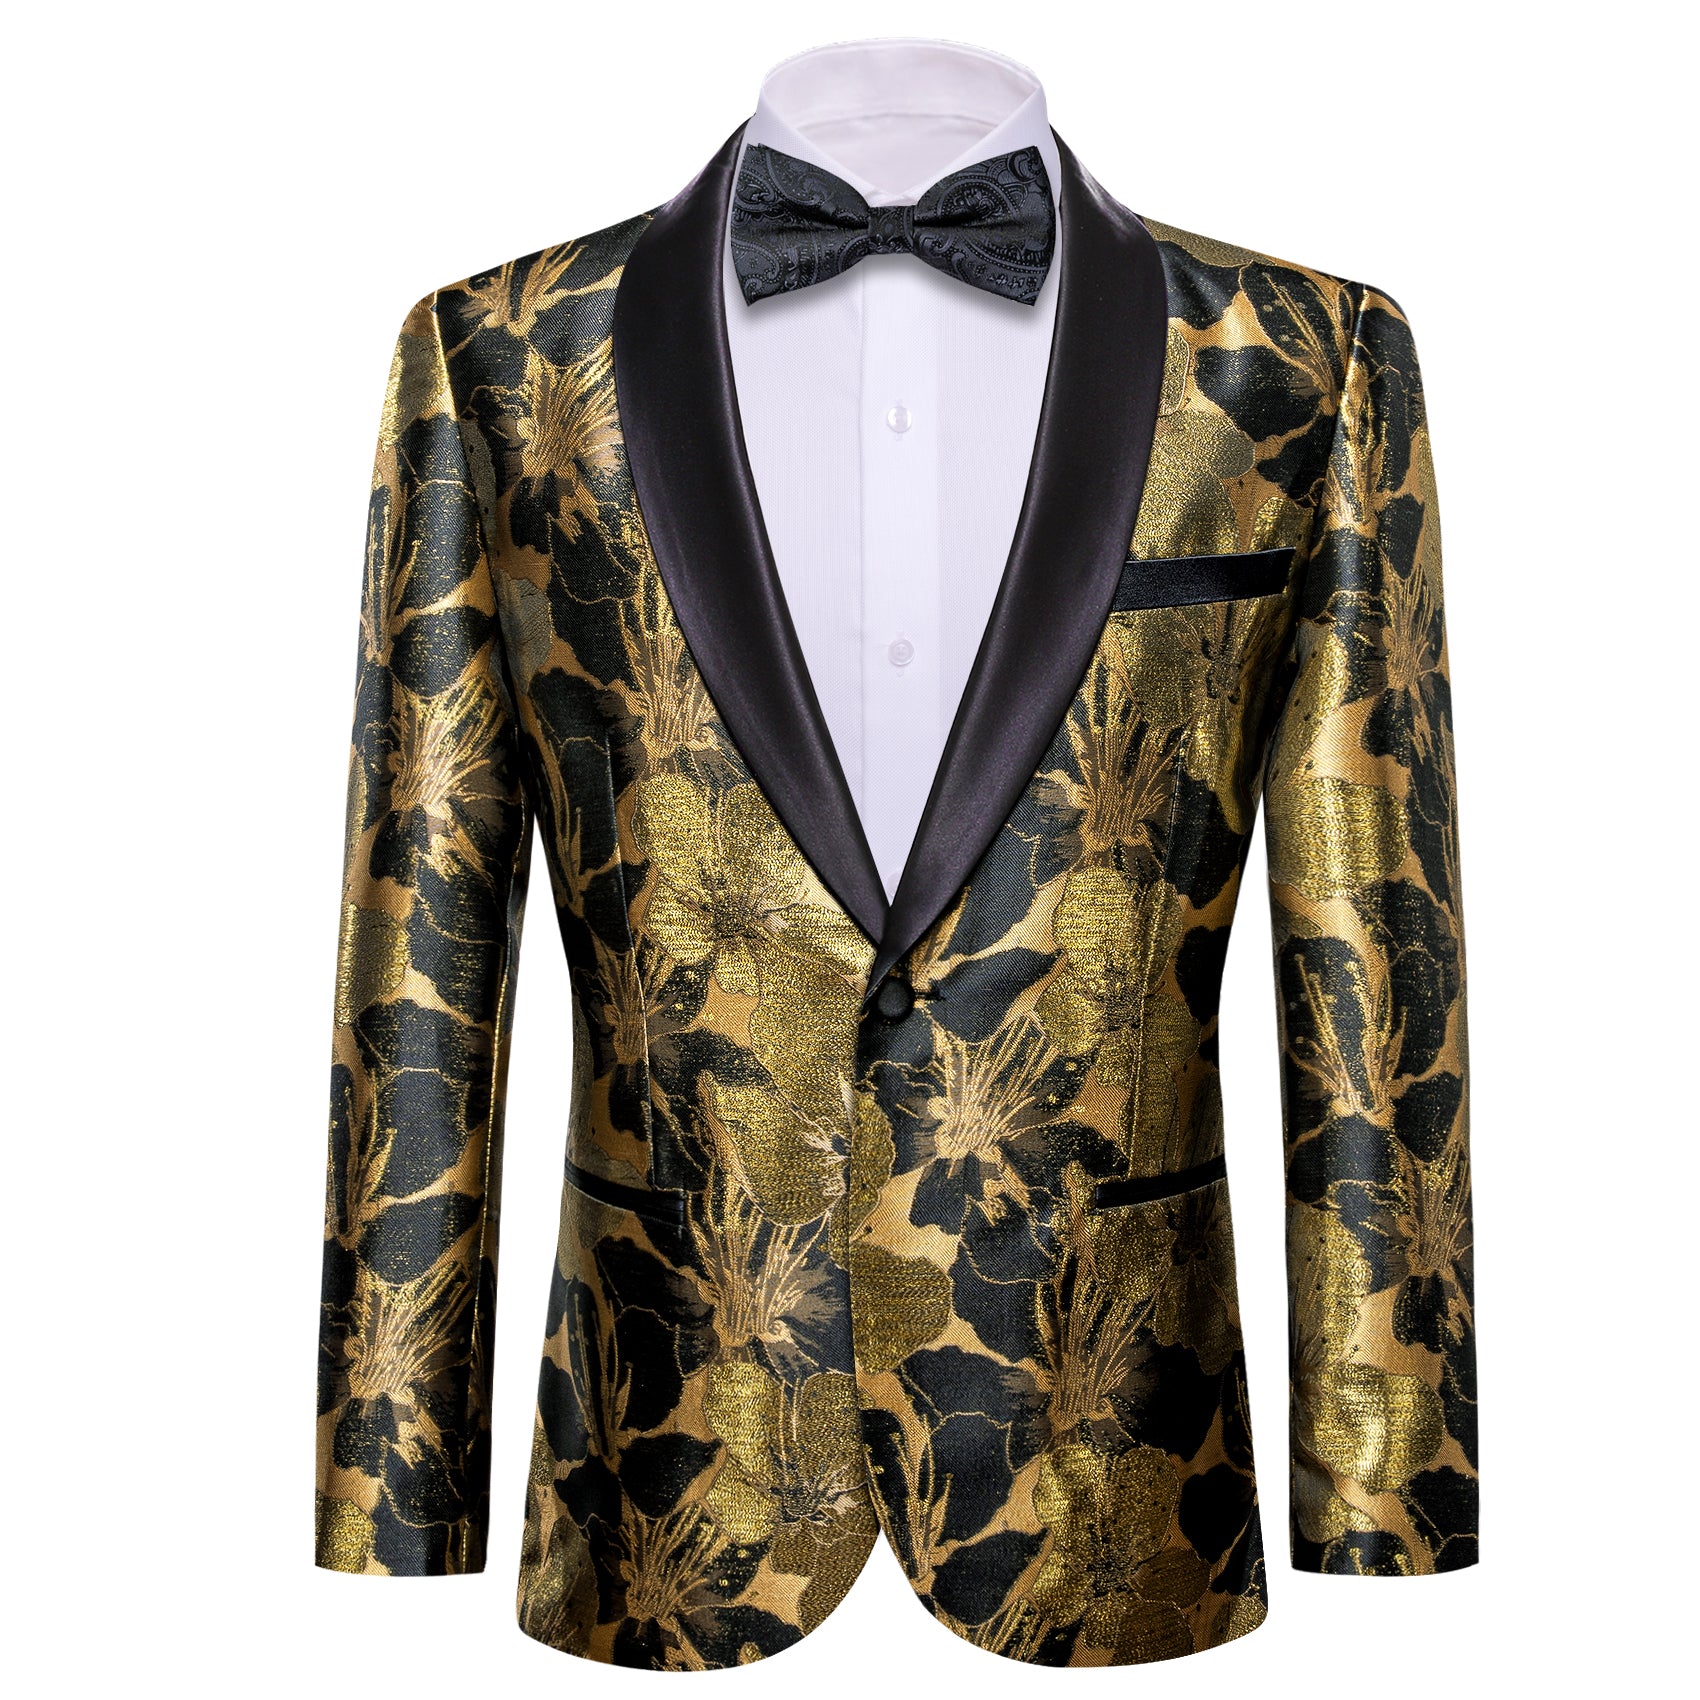 Barry.wang Shawl Collar Suit Black Gold  Floral Men's Suit Jacket Slim One Button Stylish Blazer